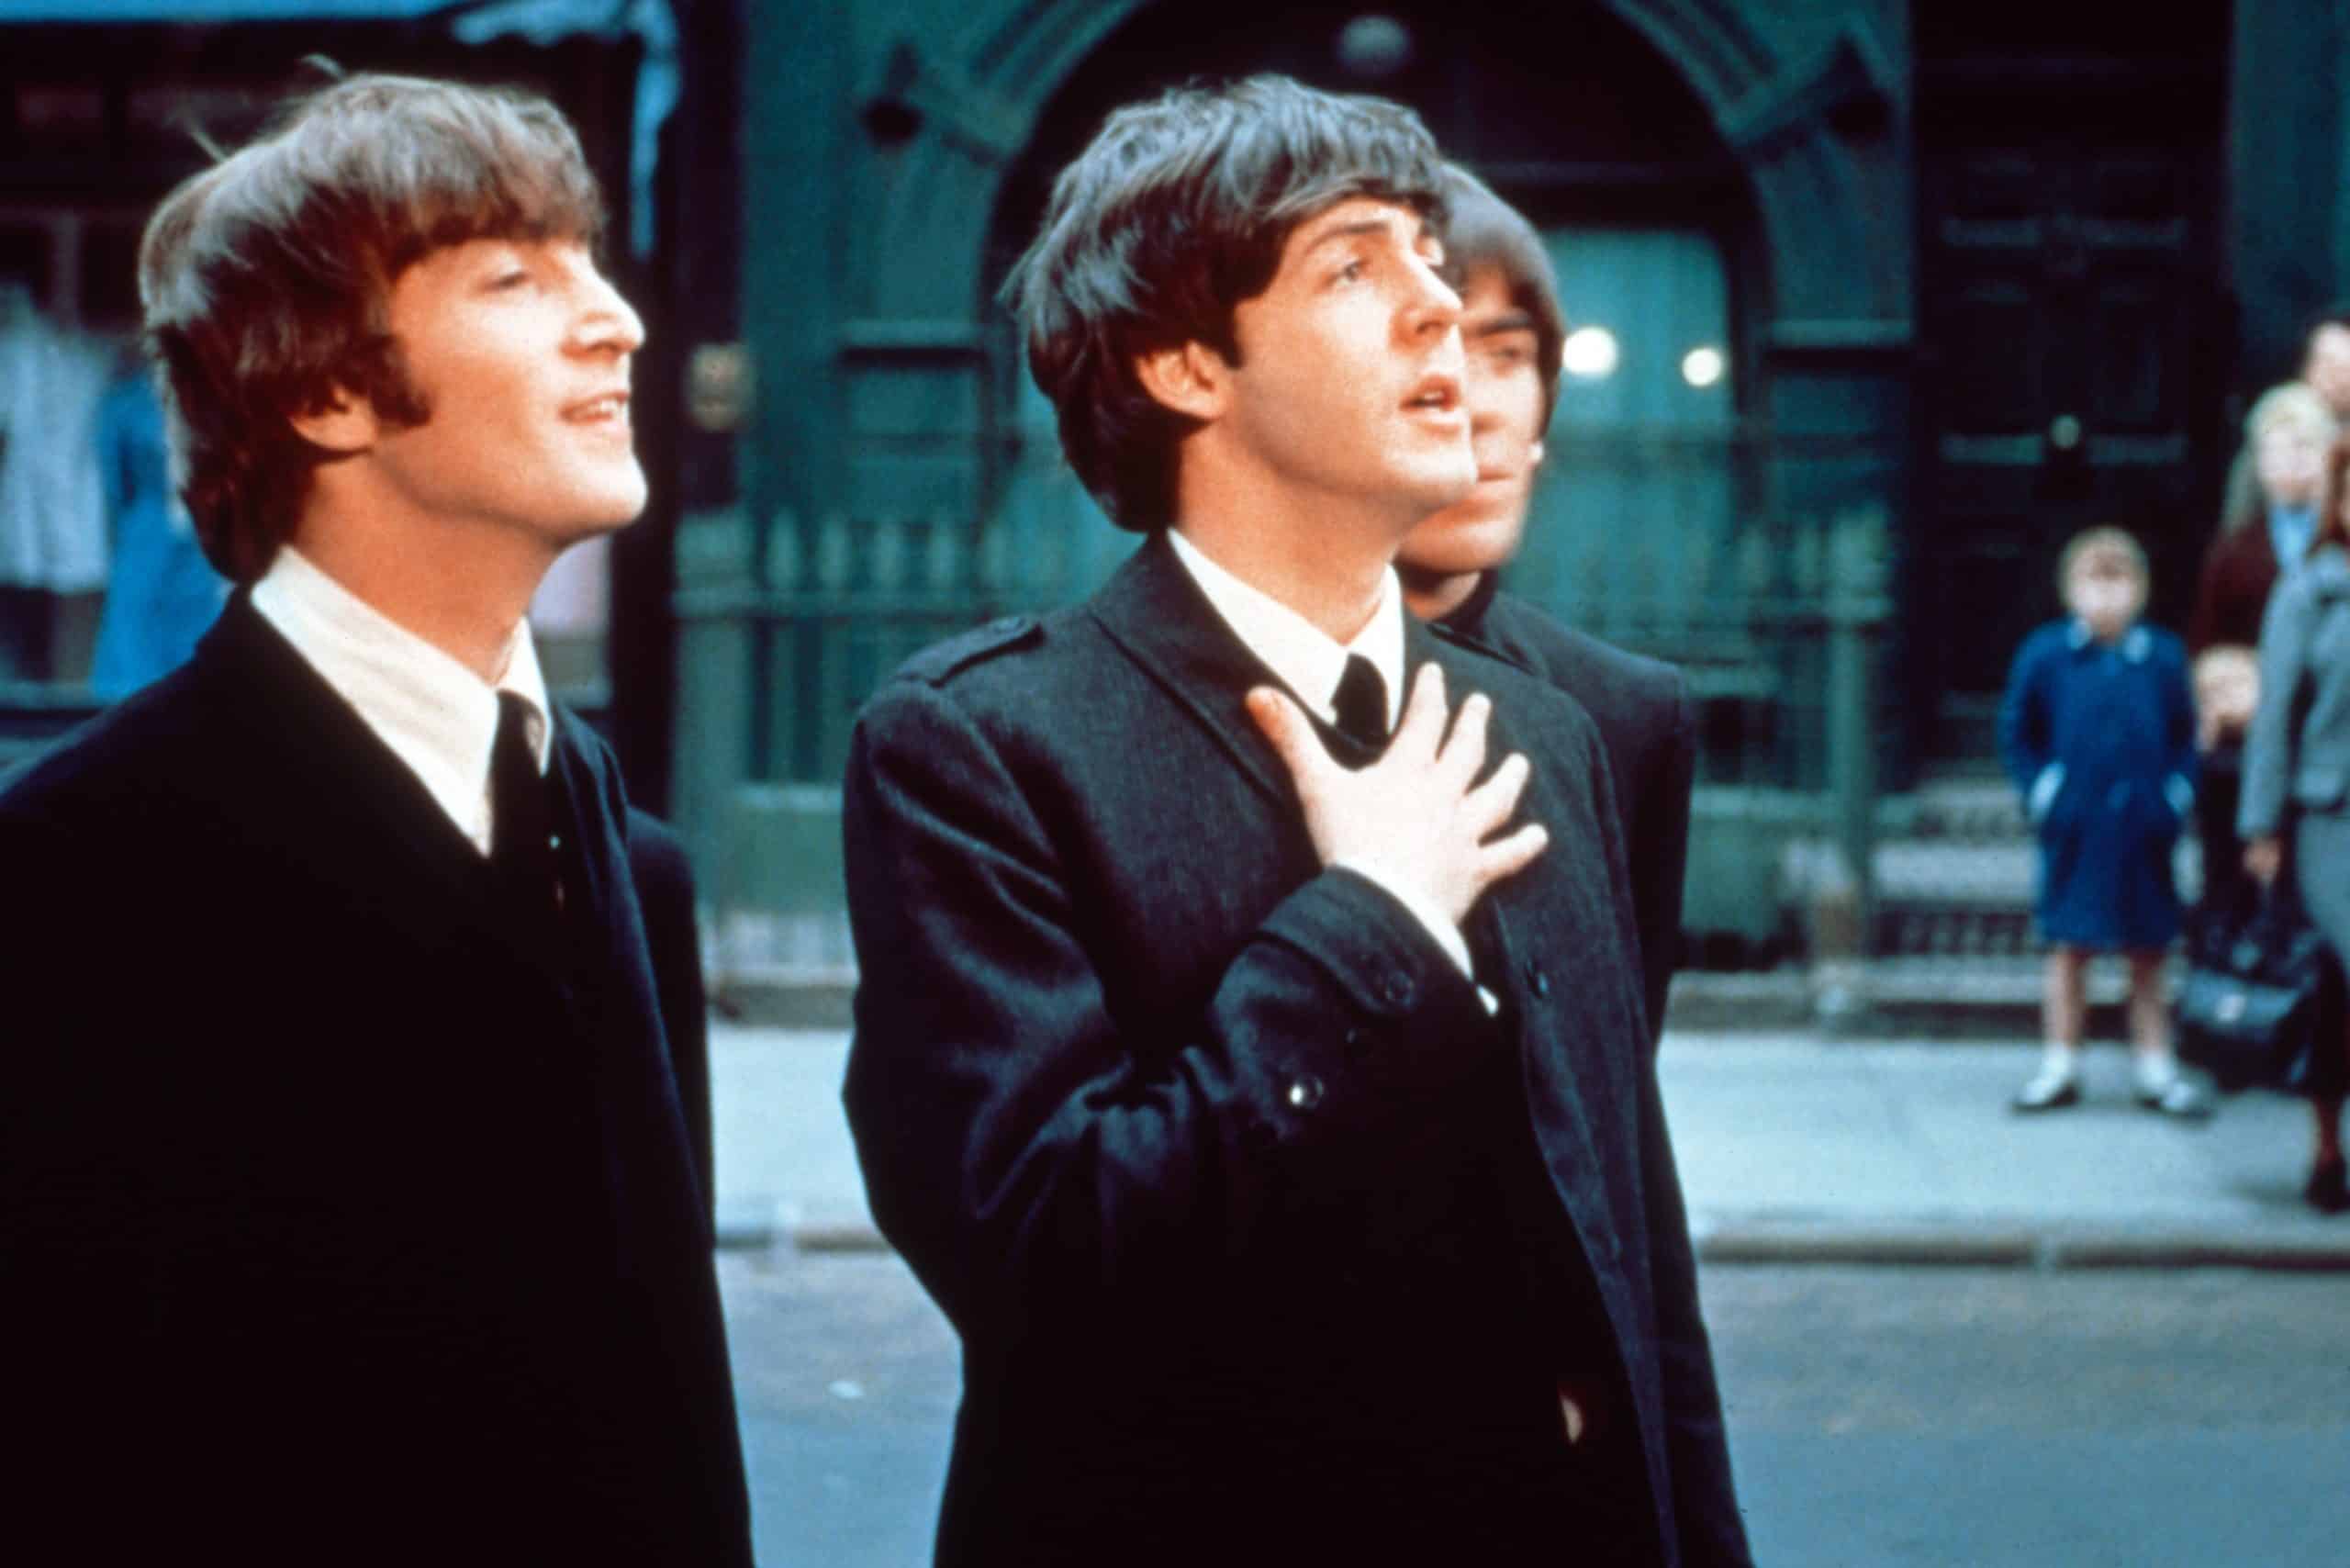 A HARD DAY'S NIGHT, from left: John Lennon, Paul McCartney, George Harrison (obscured), 1964